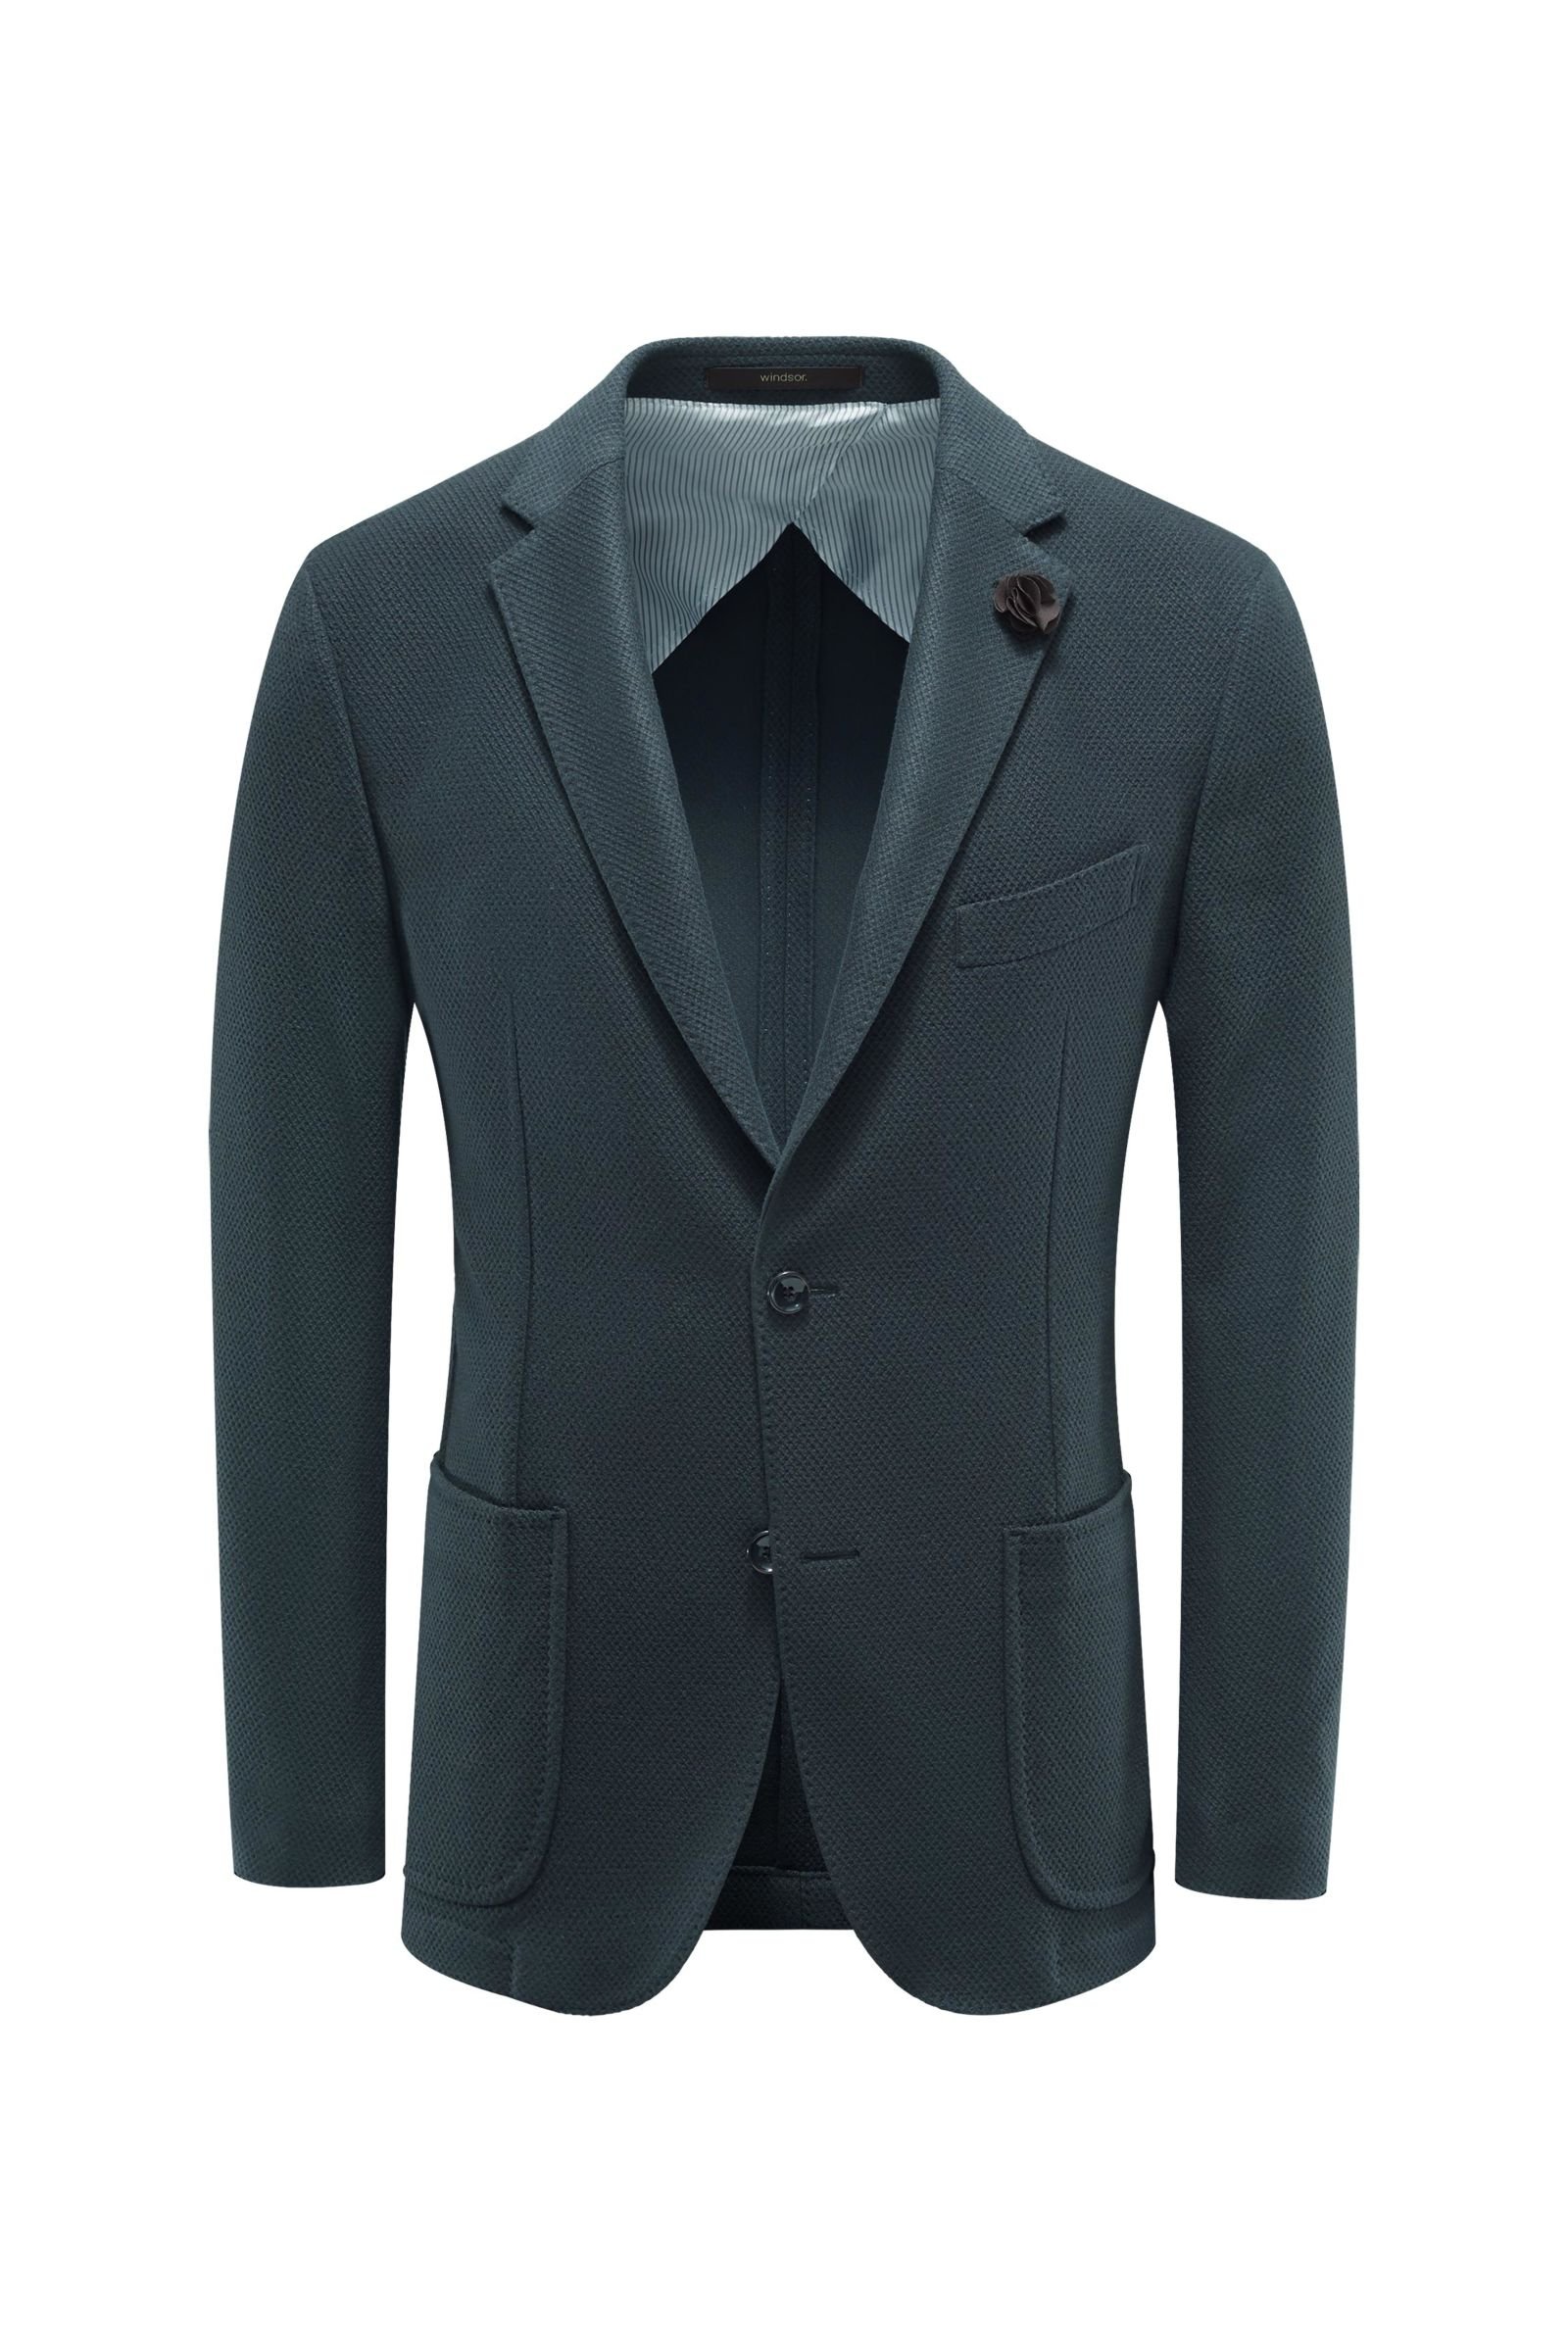 Smart-casual jacket 'Magliero' grey-green